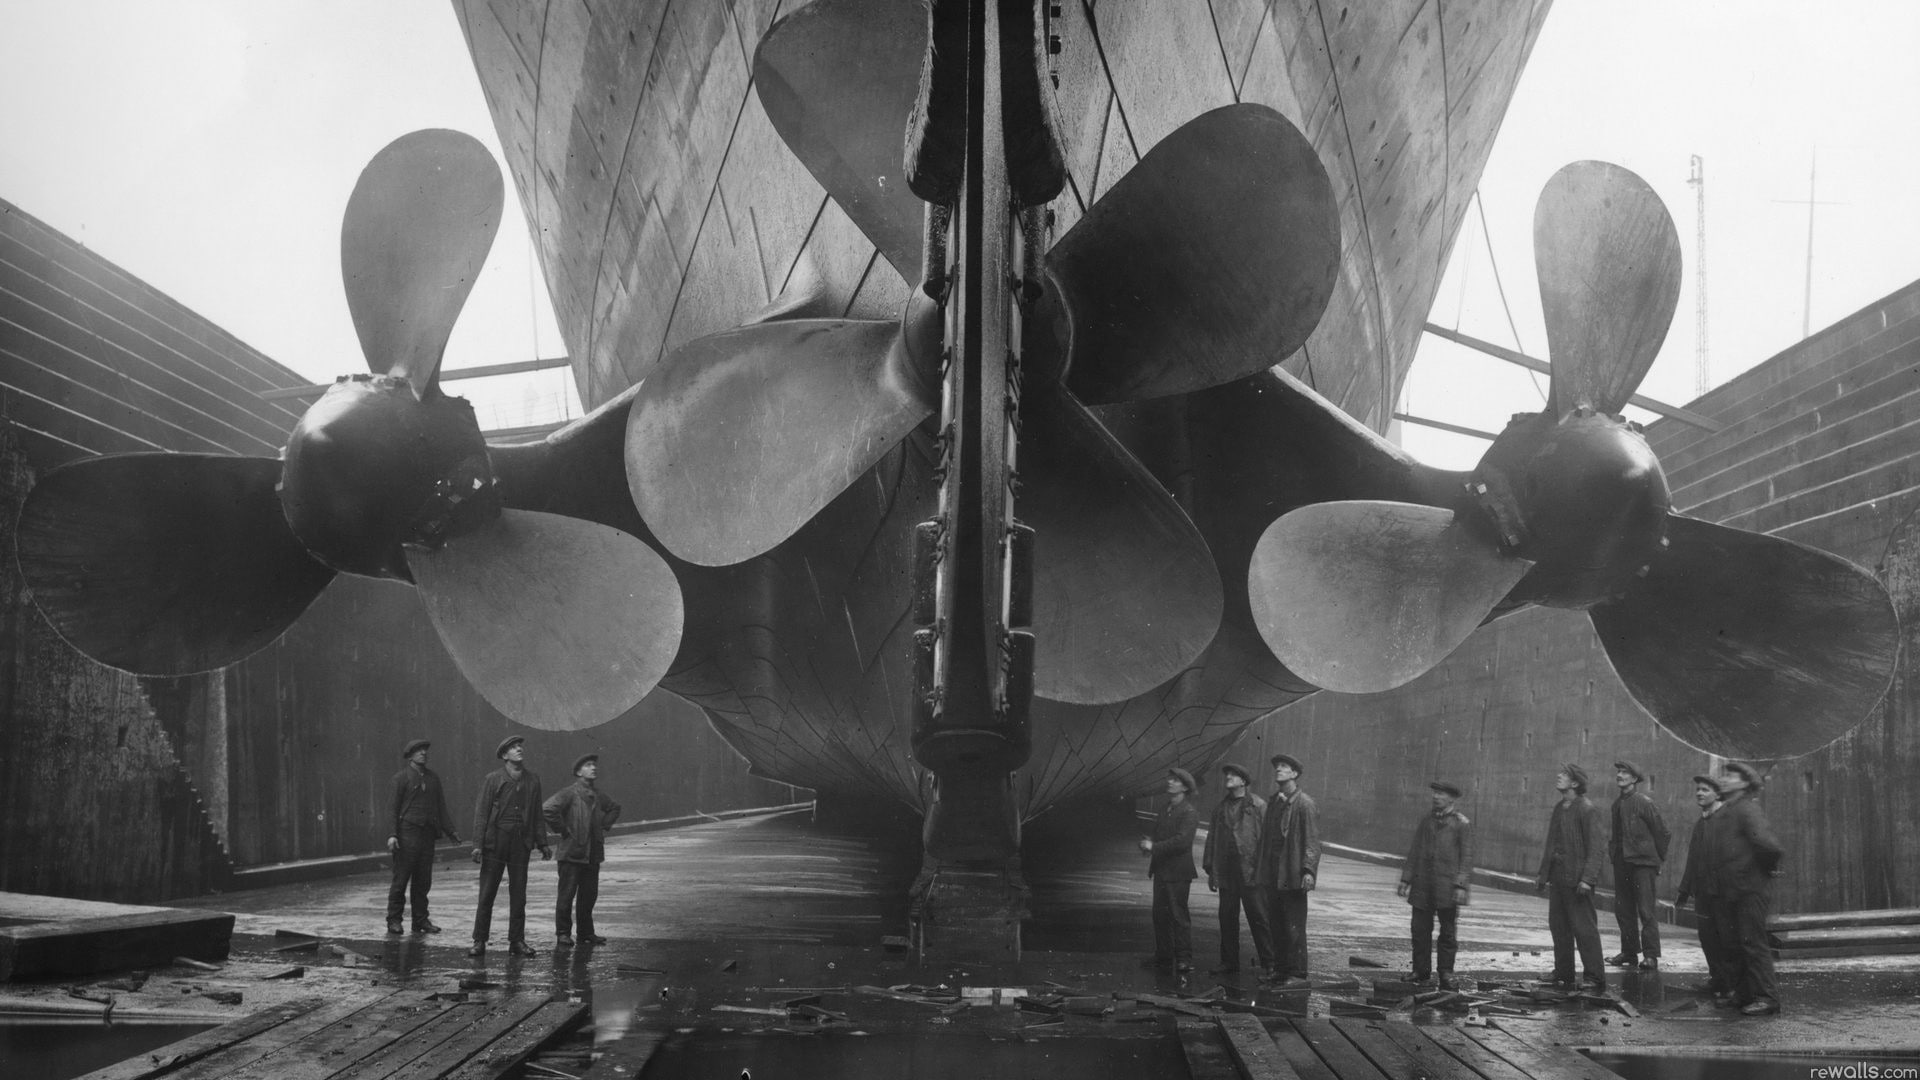 Titanic, photography, ship, workers, Belfast, dock, propeller